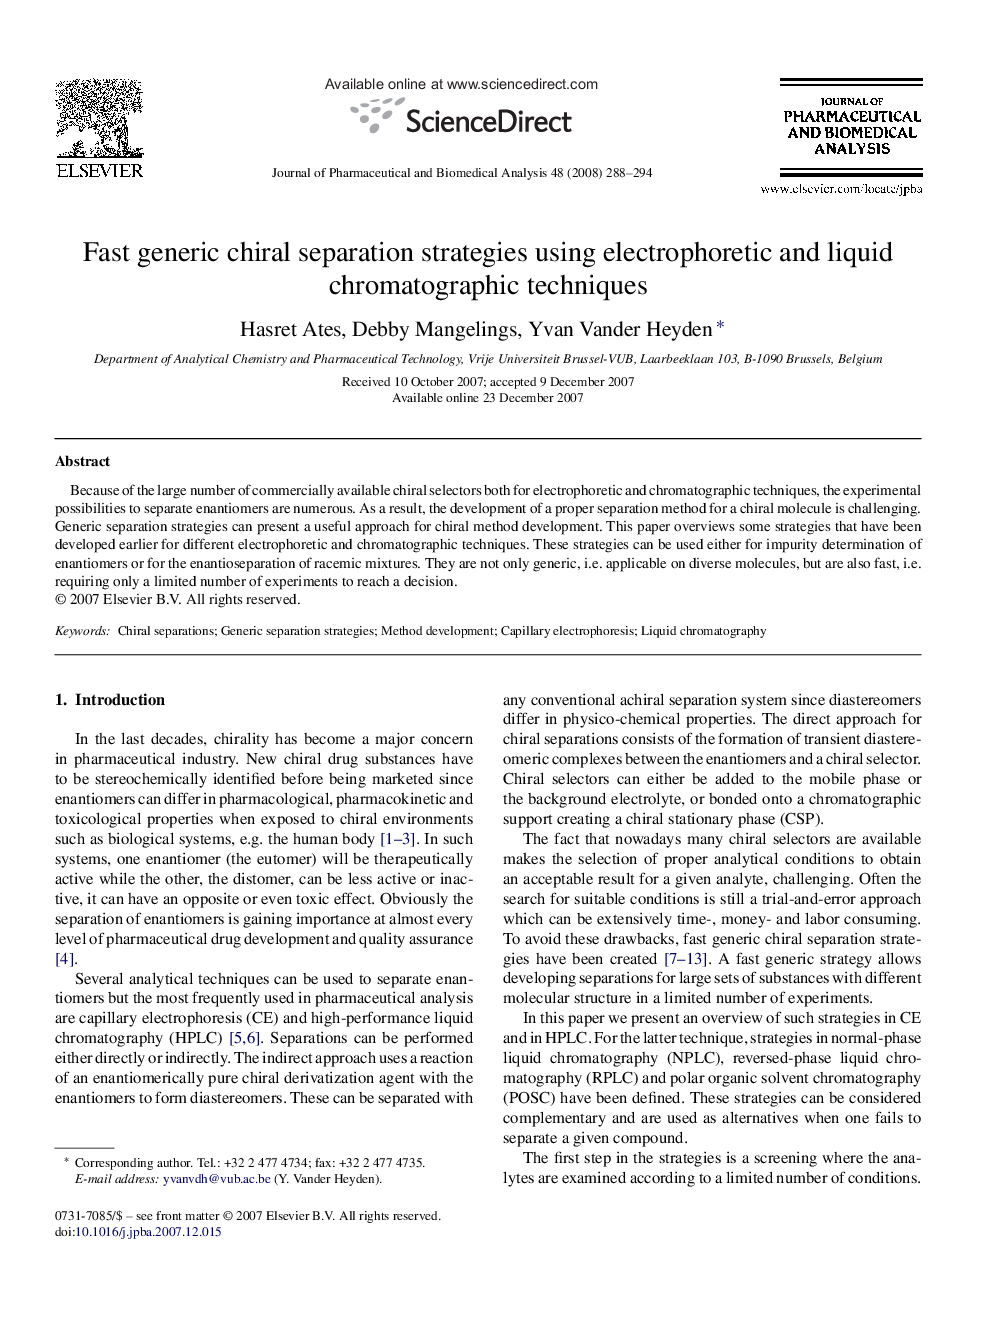 Fast generic chiral separation strategies using electrophoretic and liquid chromatographic techniques